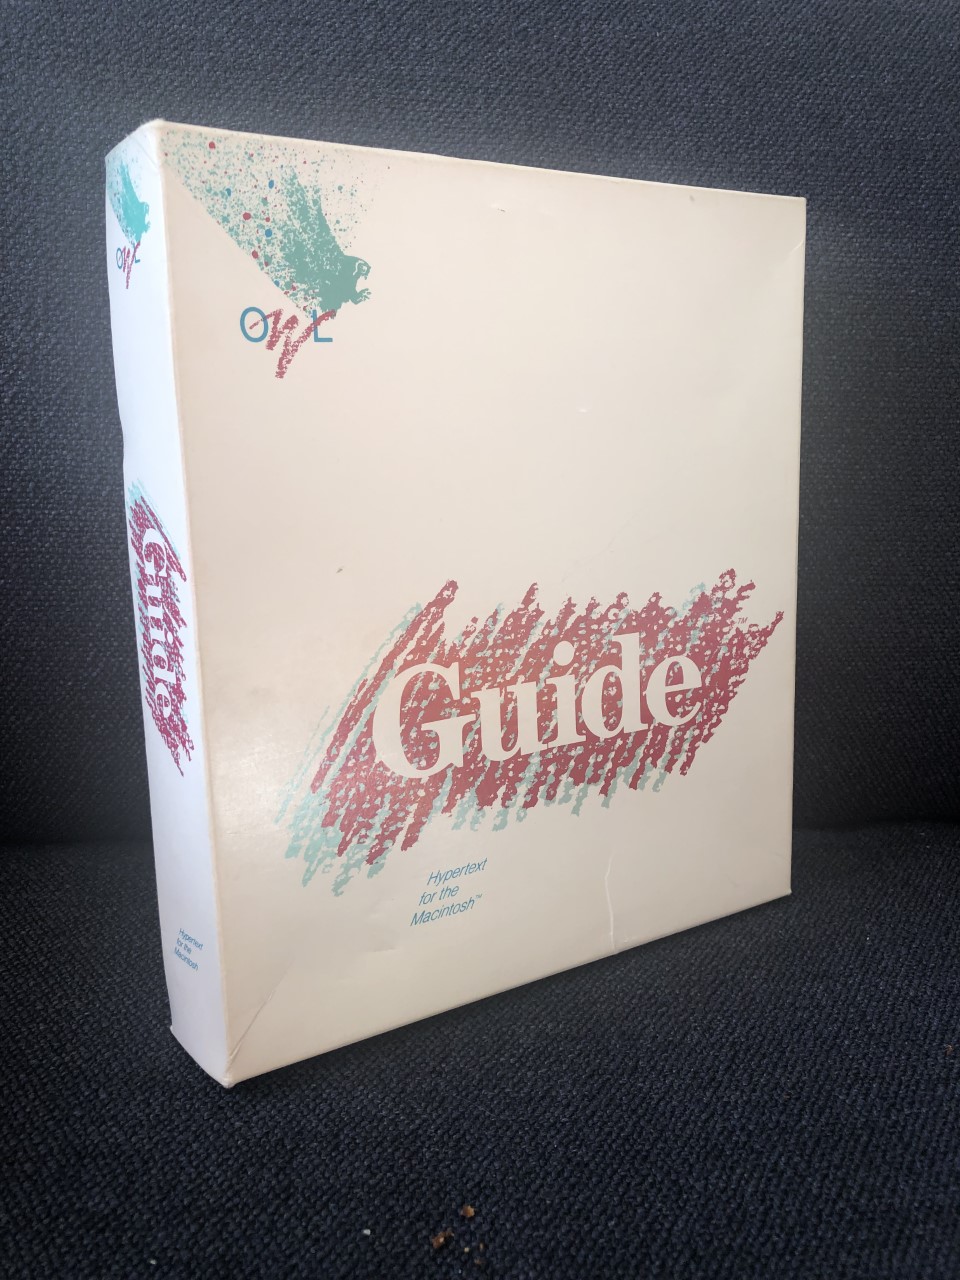 The Guide program manual